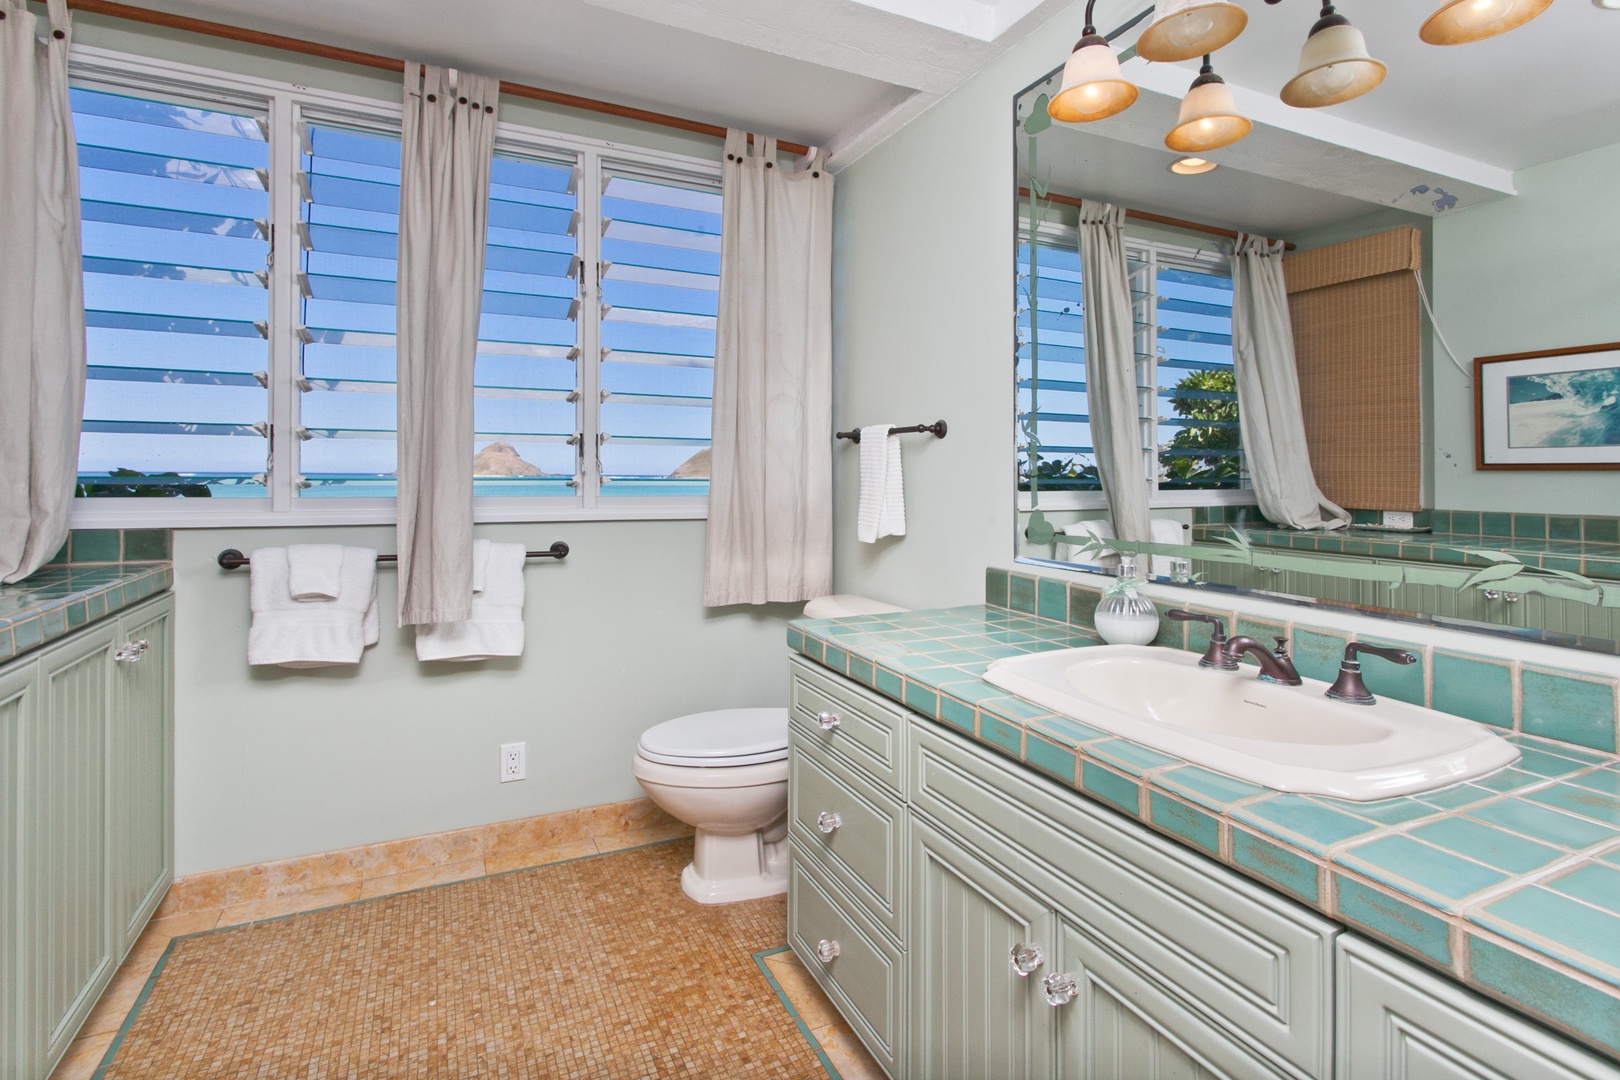 Kailua Vacation Rentals, Hale Kainalu* - Primary ensuite bathroom has natural light and plenty of storage.